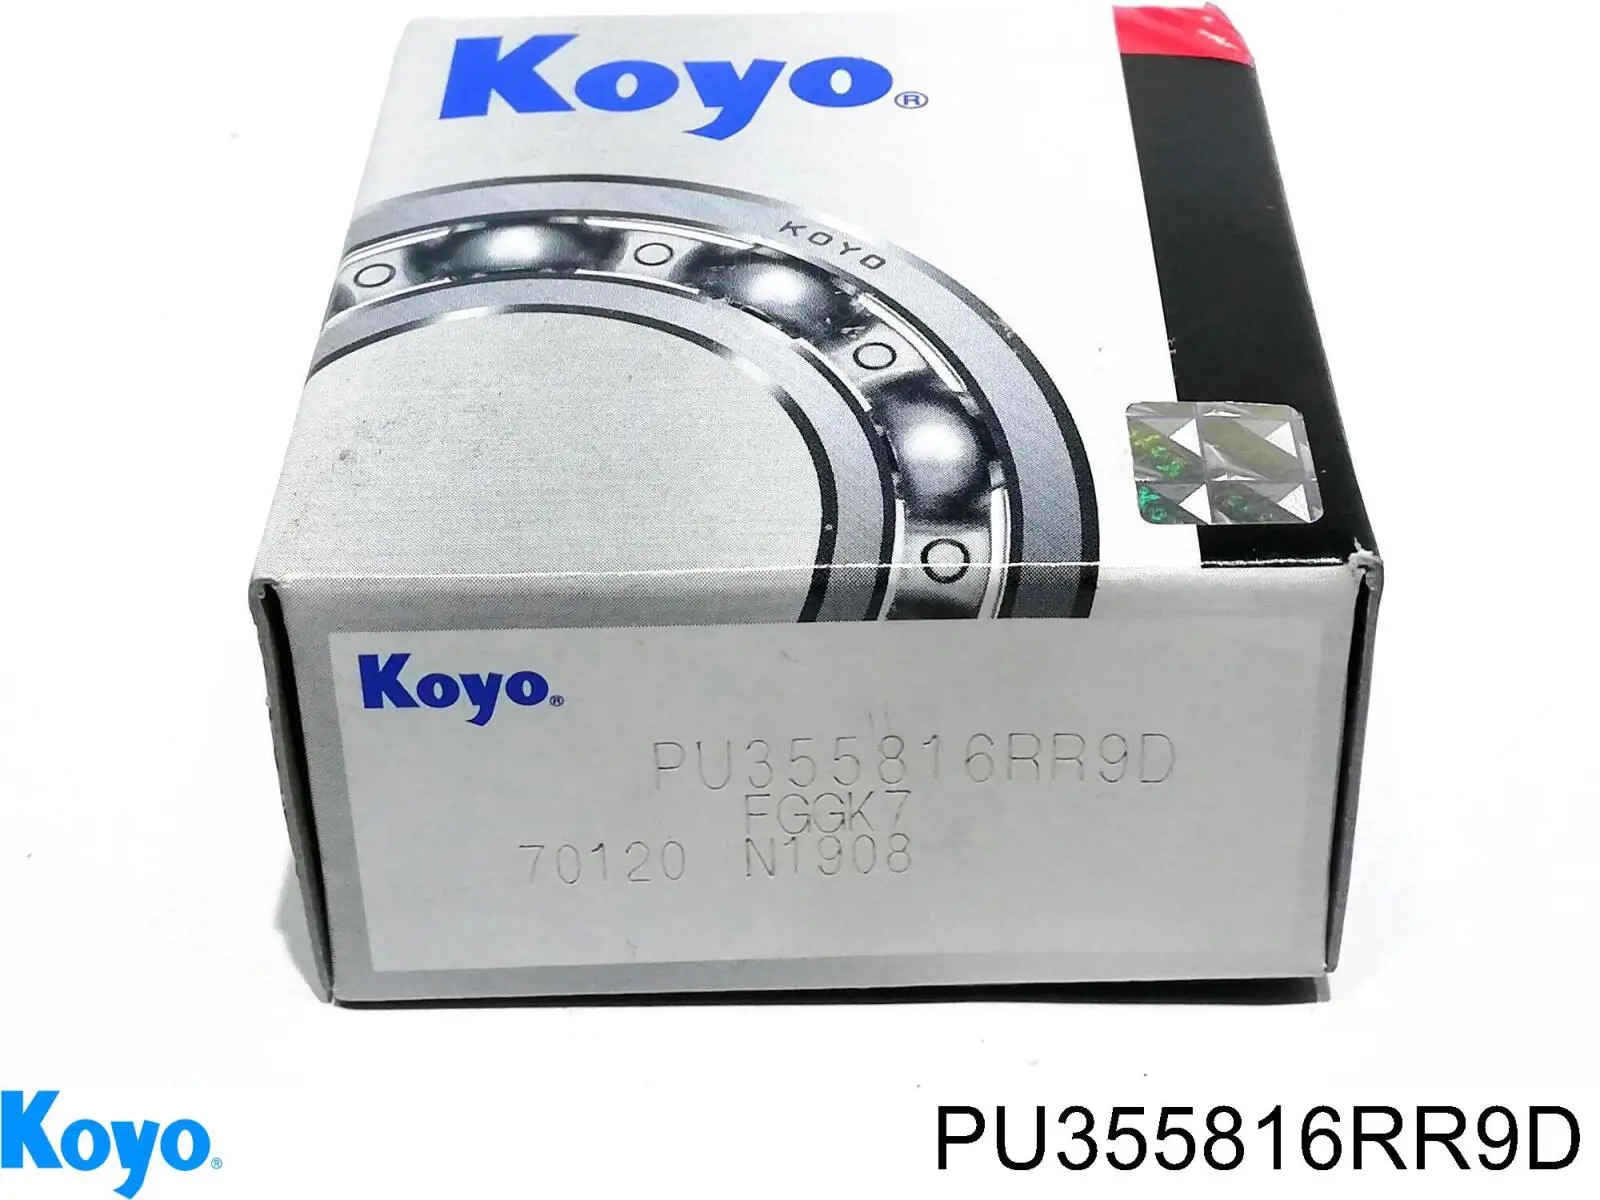 PU355816RR9D Koyo ролик ремня грм паразитный